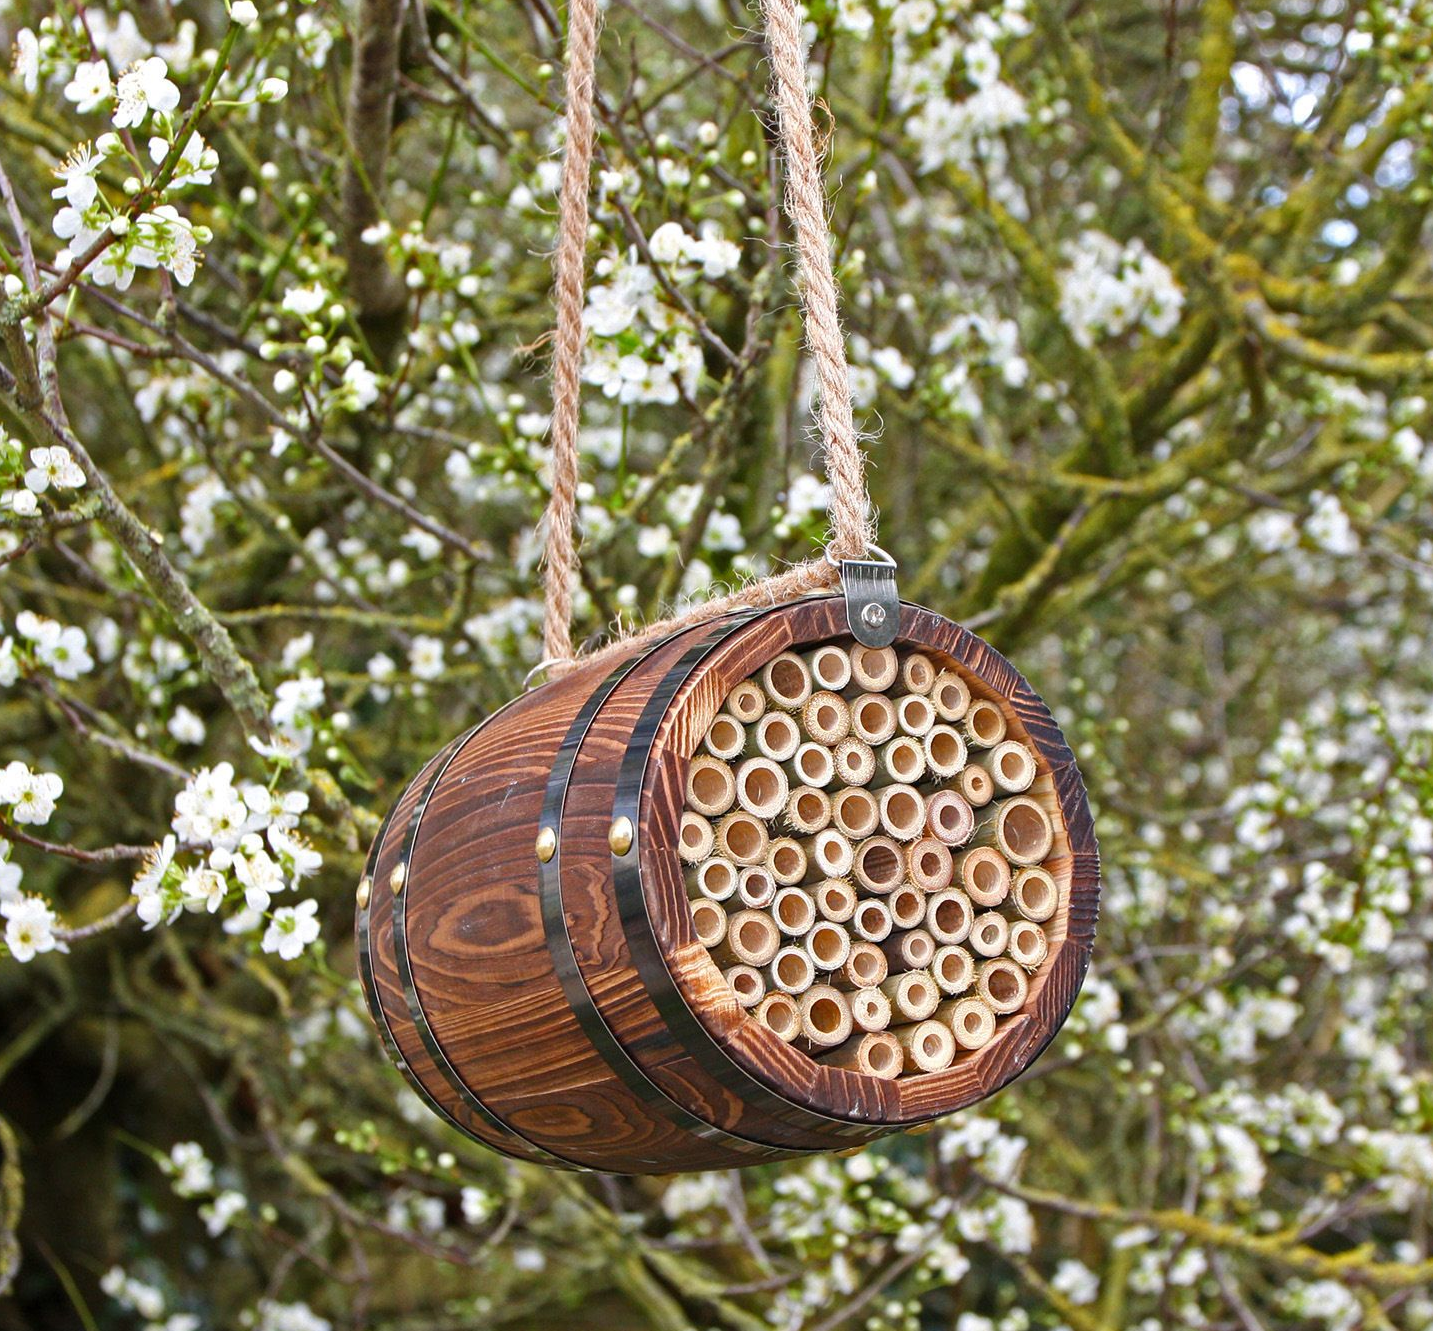 Wildlife World Bee Barrel Habitat